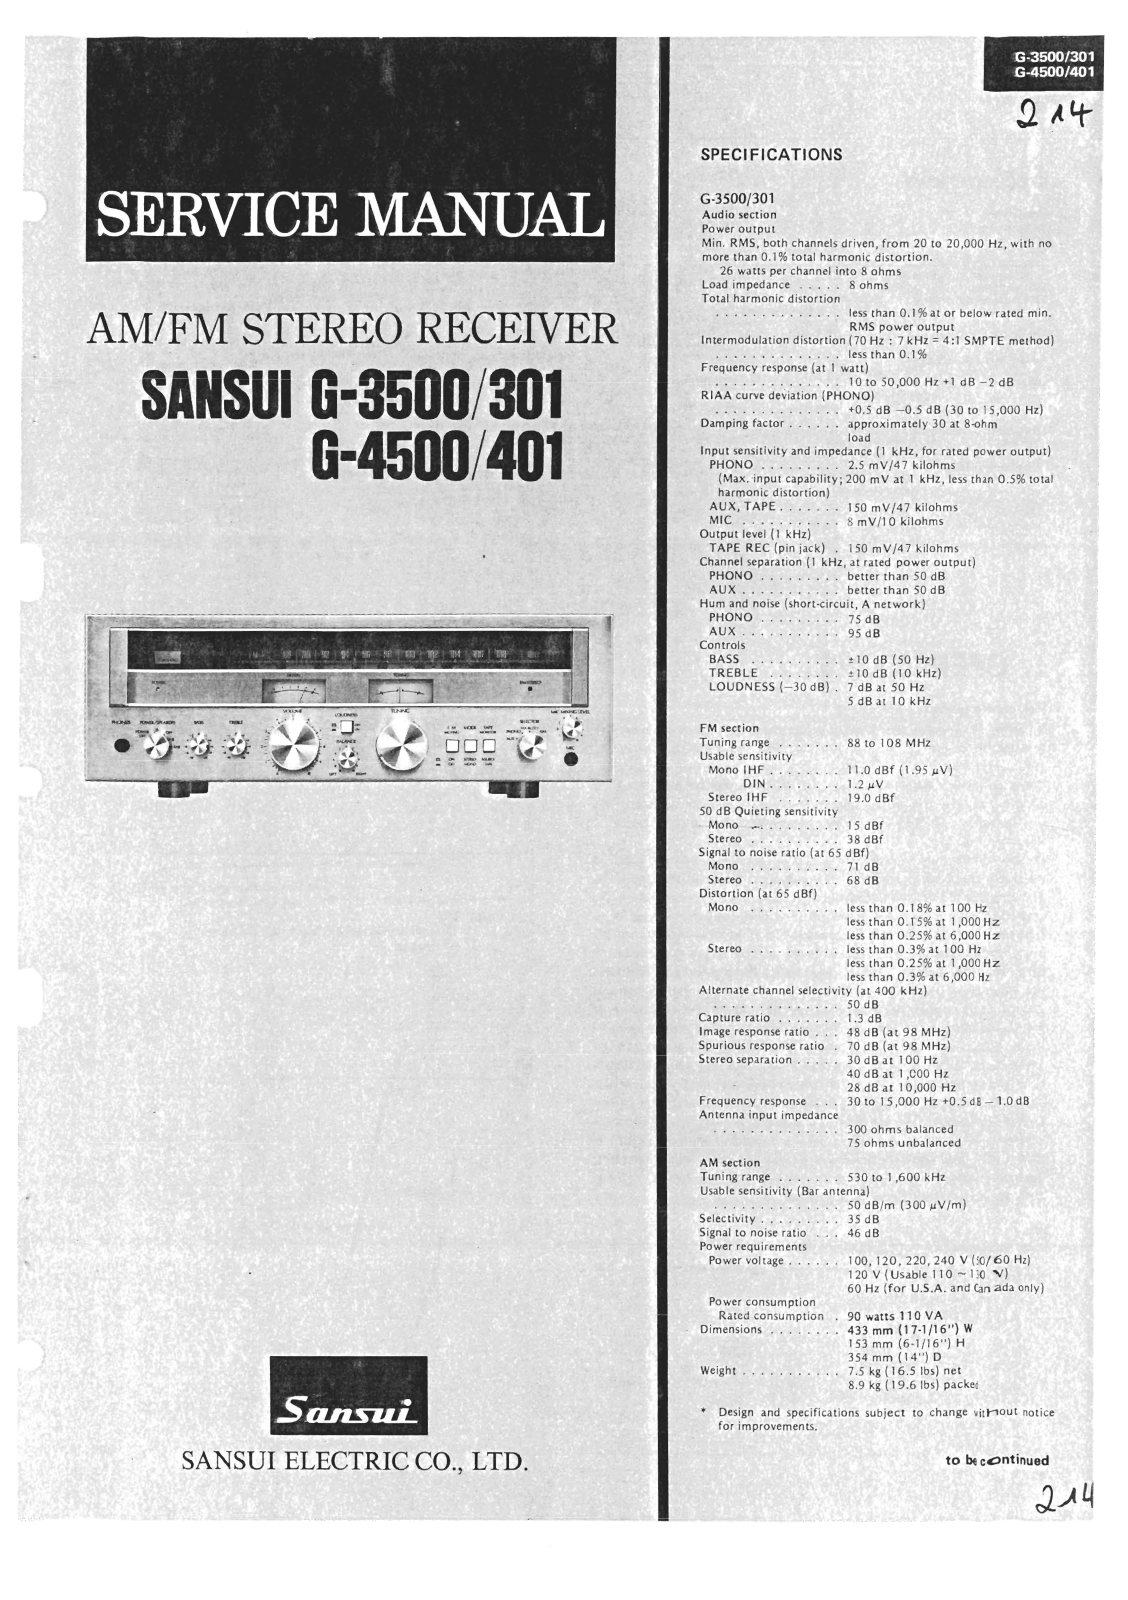 Sansui G-3500 Service Manual